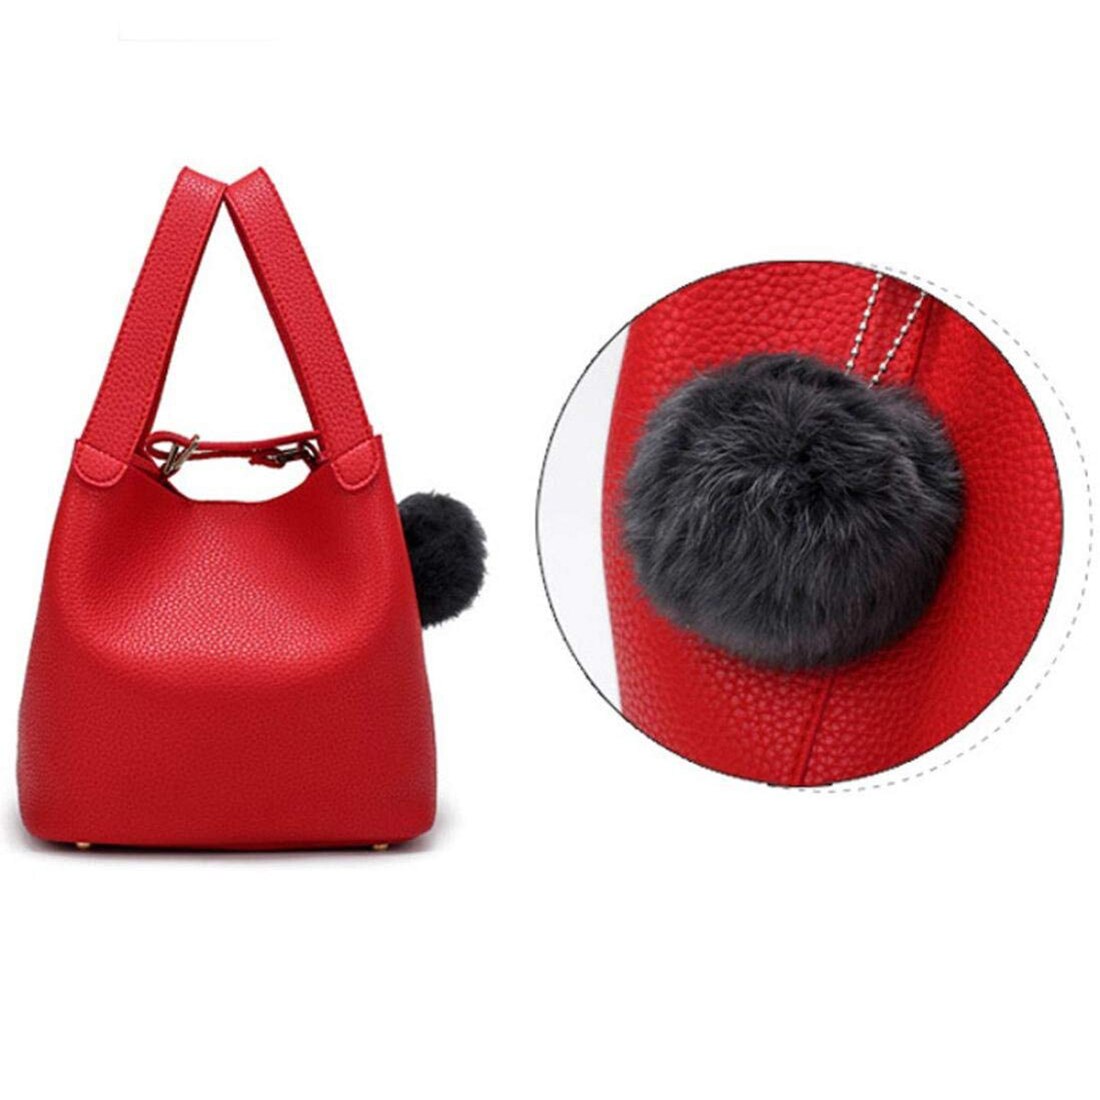 Crossbody Bag,Cute Hair Ball PU Leather Hasp Handbags Shoulder Bag Messenger Tote Purse For Women and Girls - ebowsos